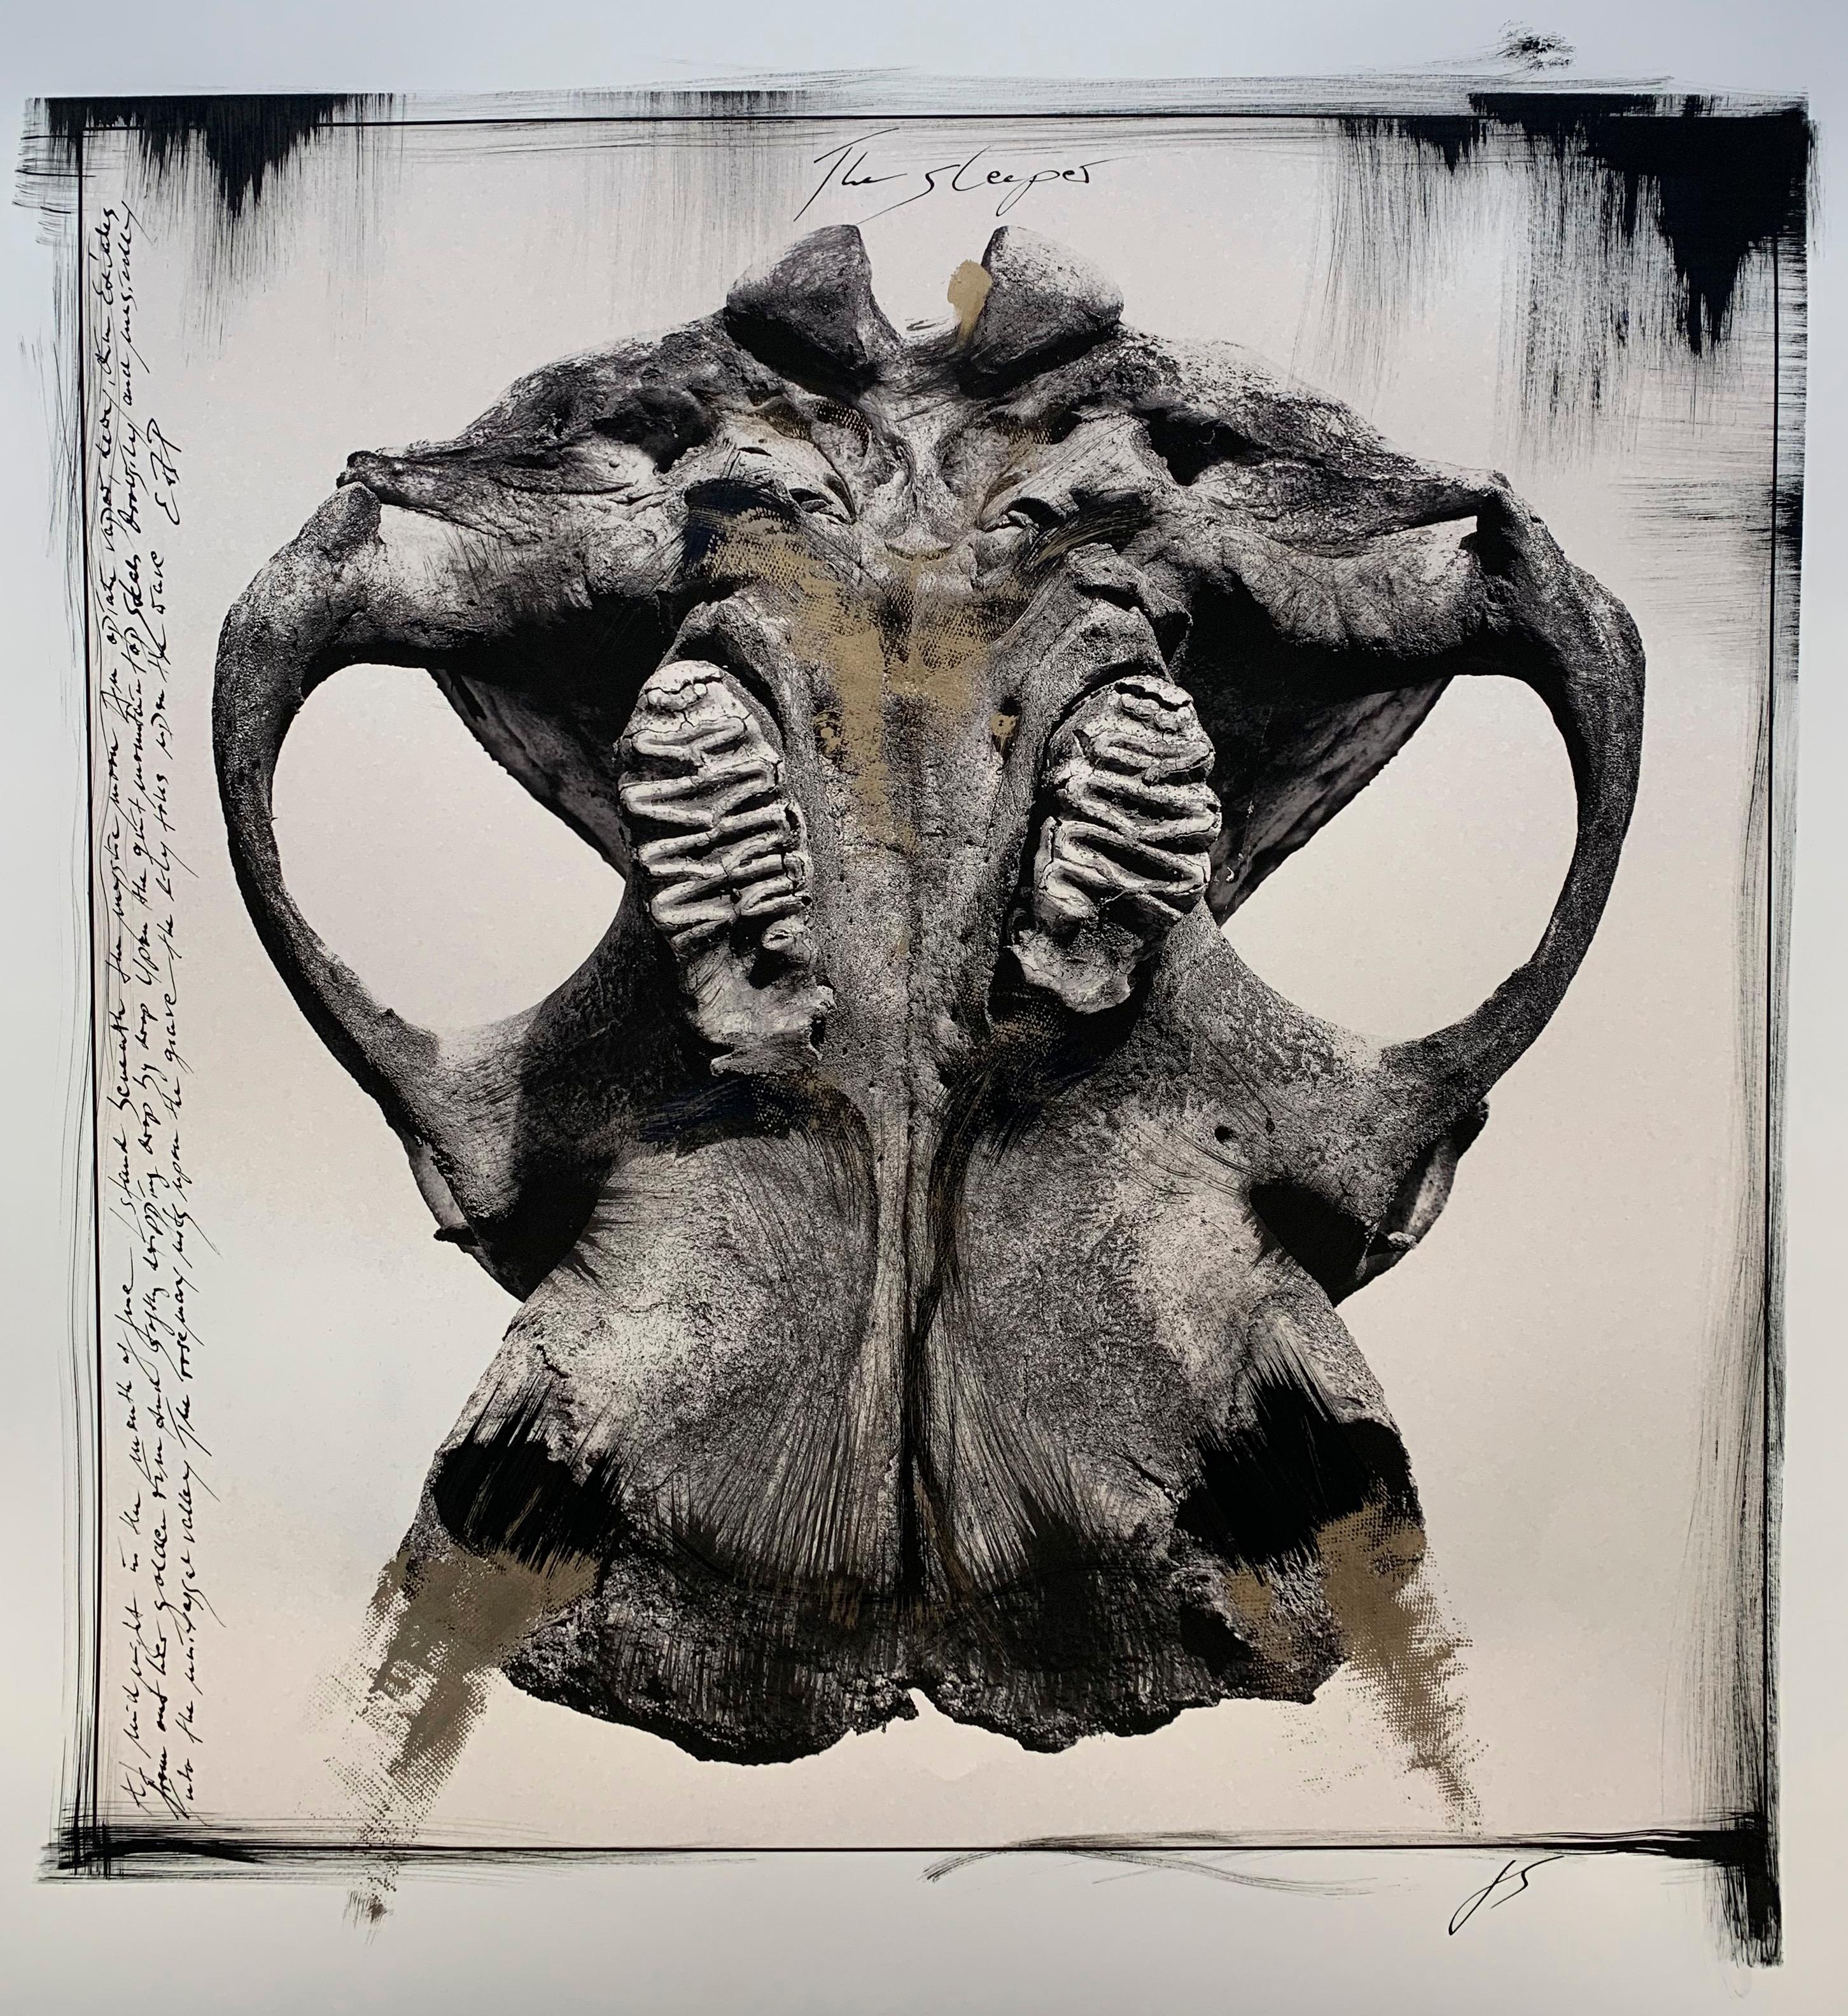 "Skull", Africa, Elephant, Painting, Photography, Mixed Media, animal